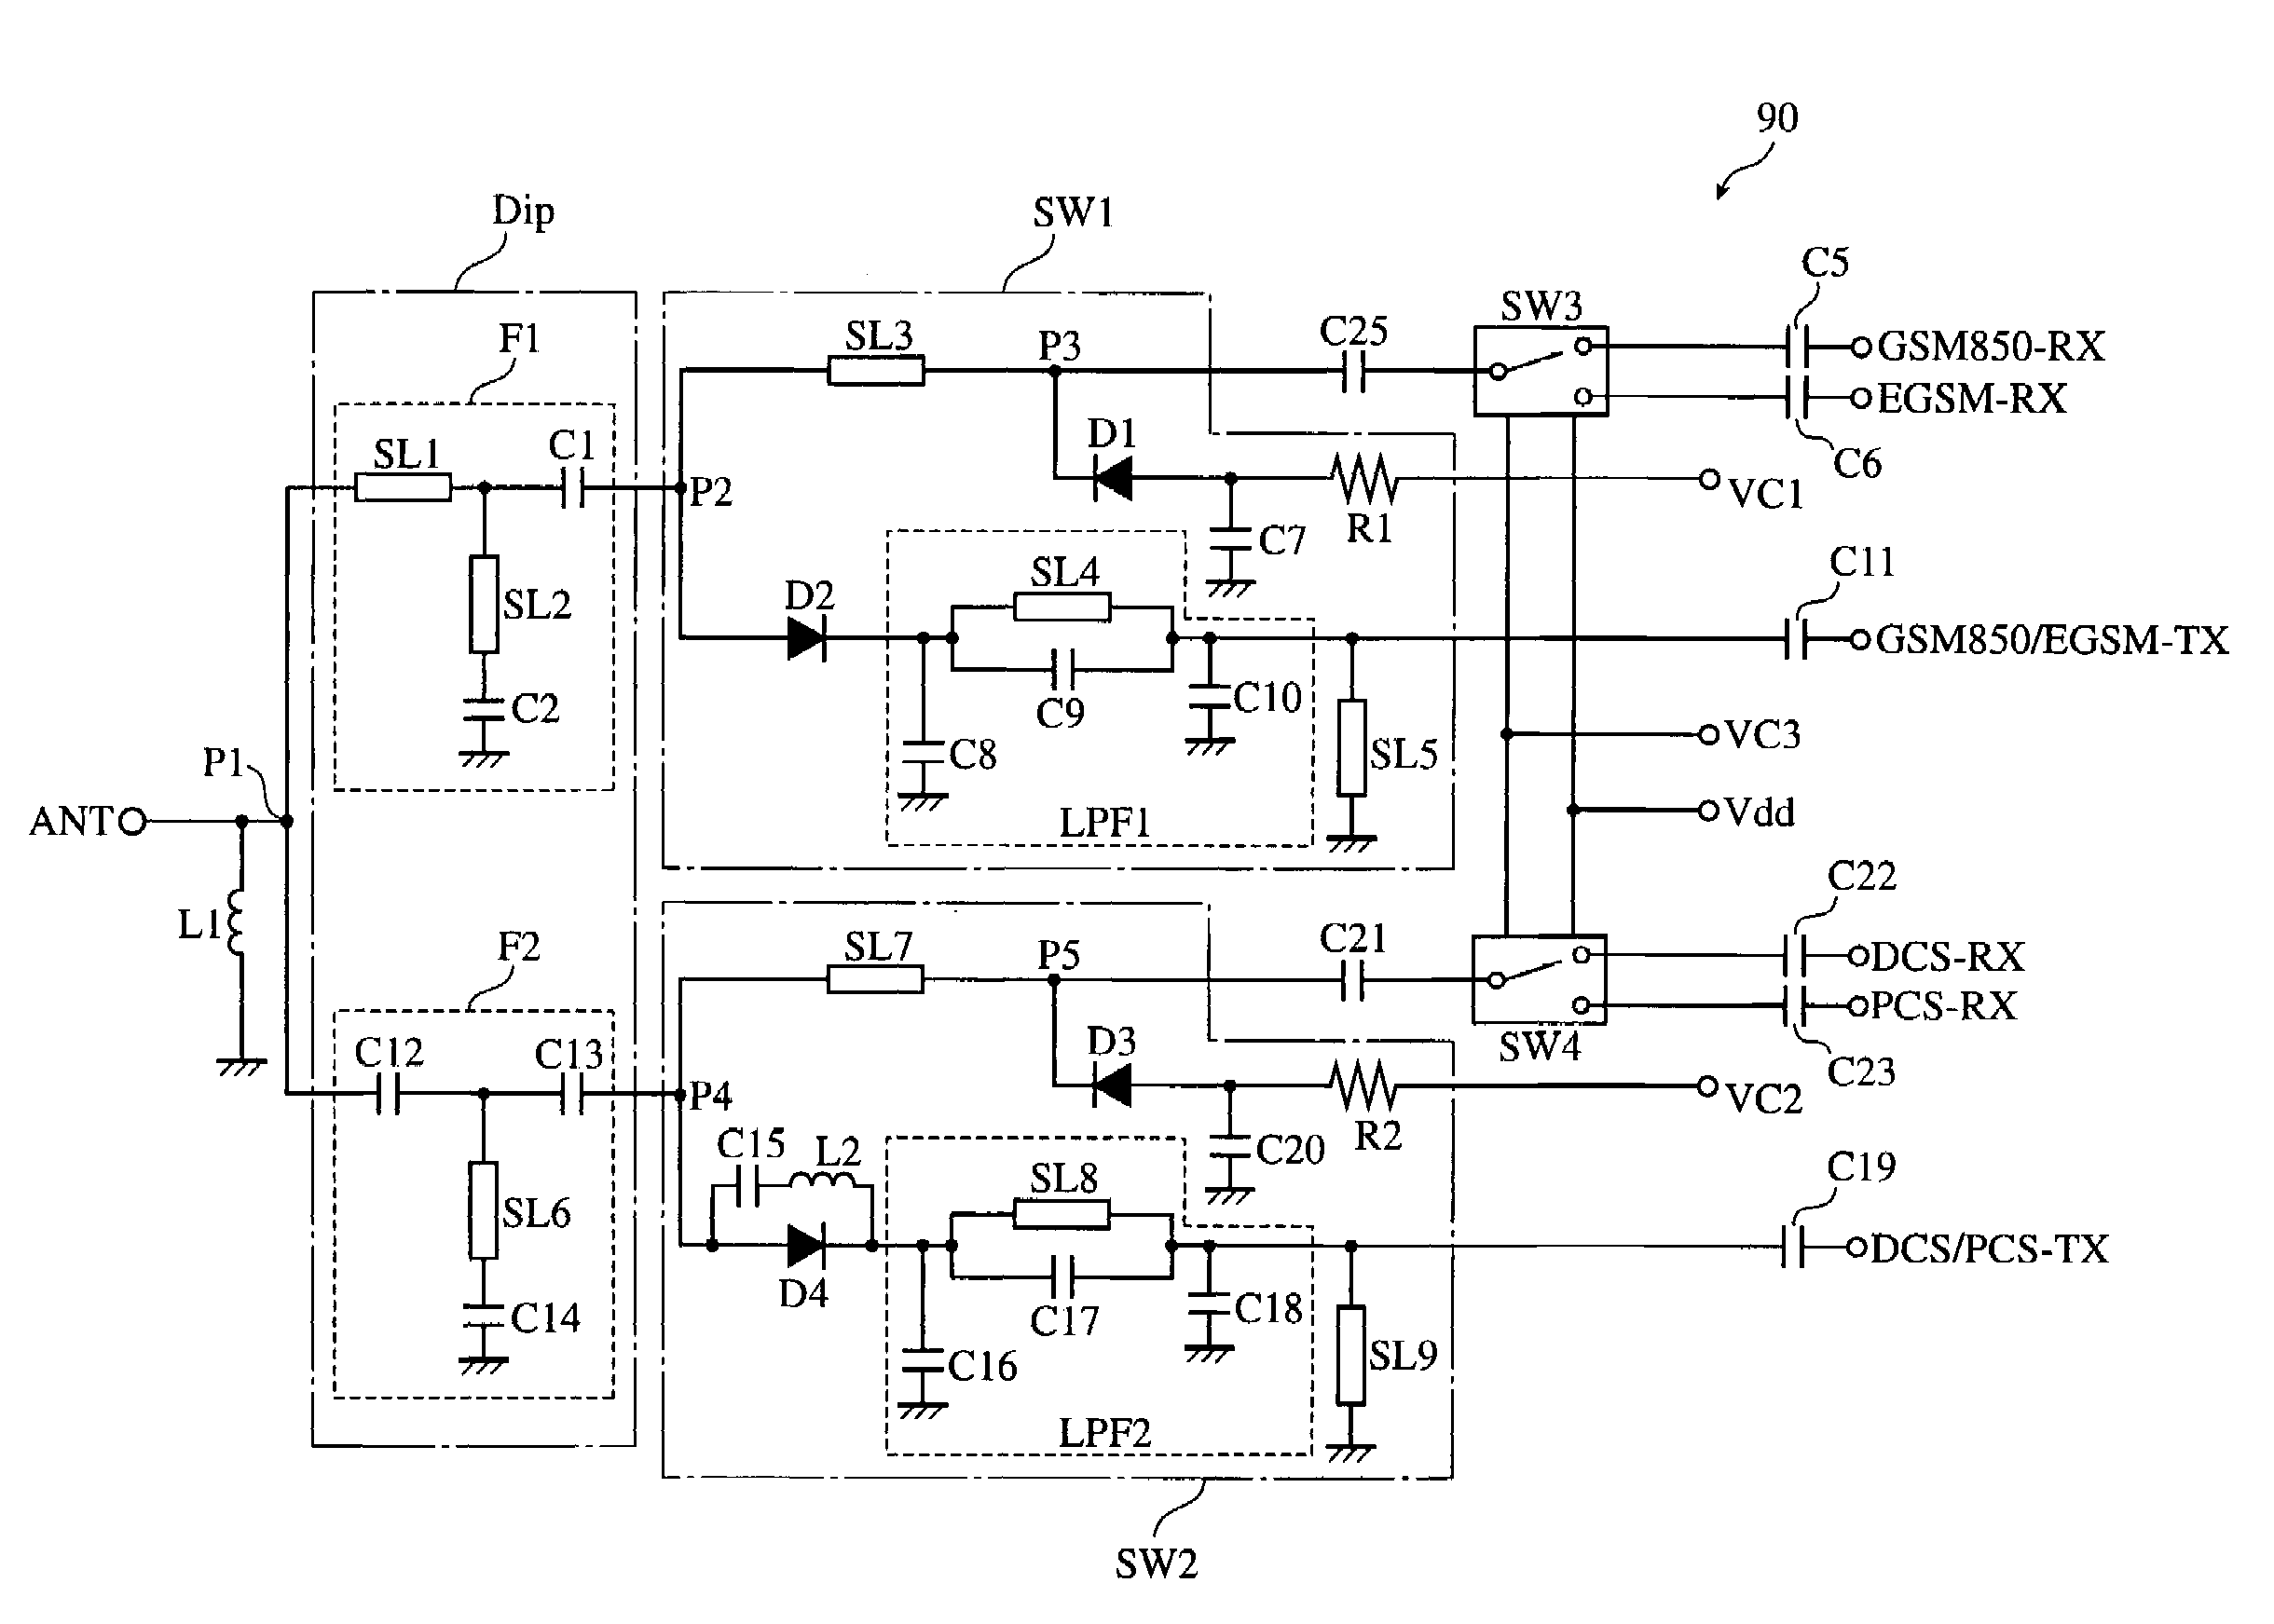 Antenna switch circuit and antenna switch module